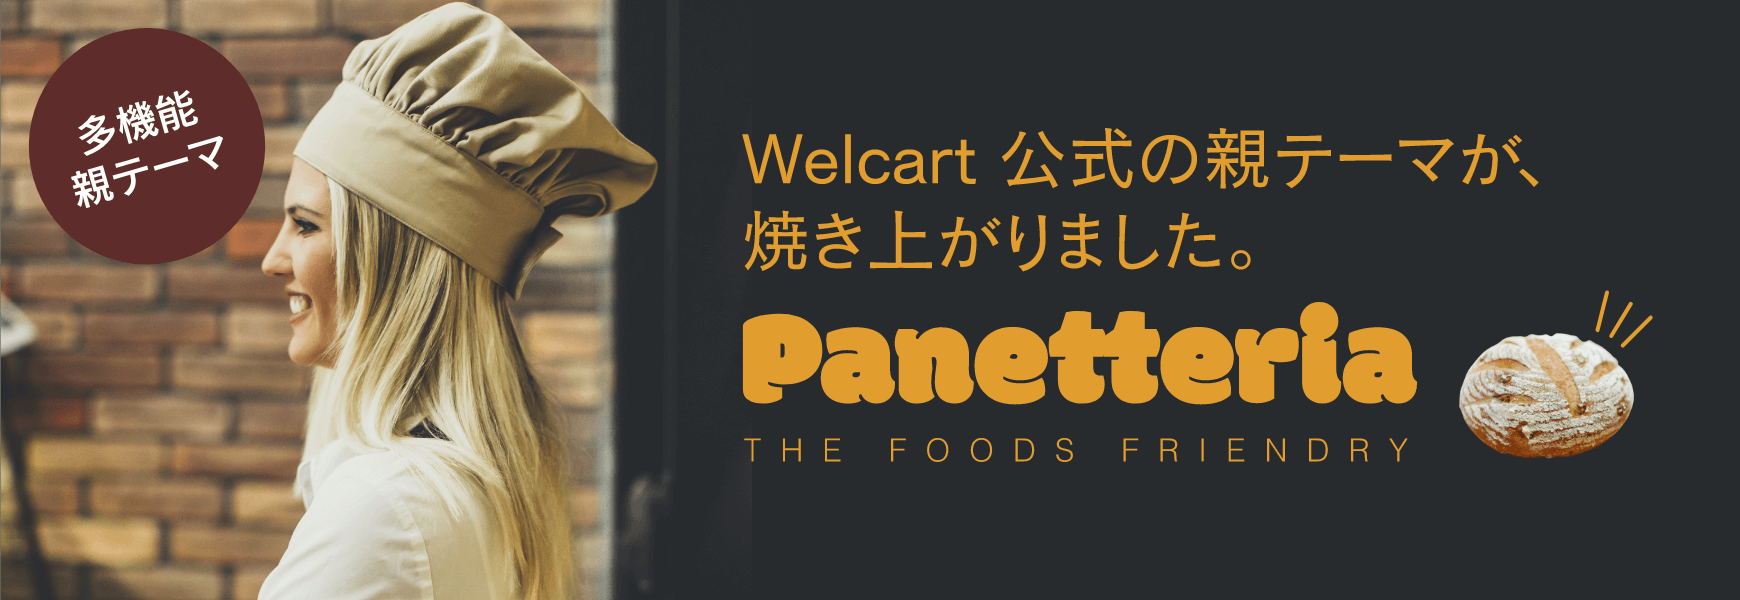 Welcart Panetteria テーマ